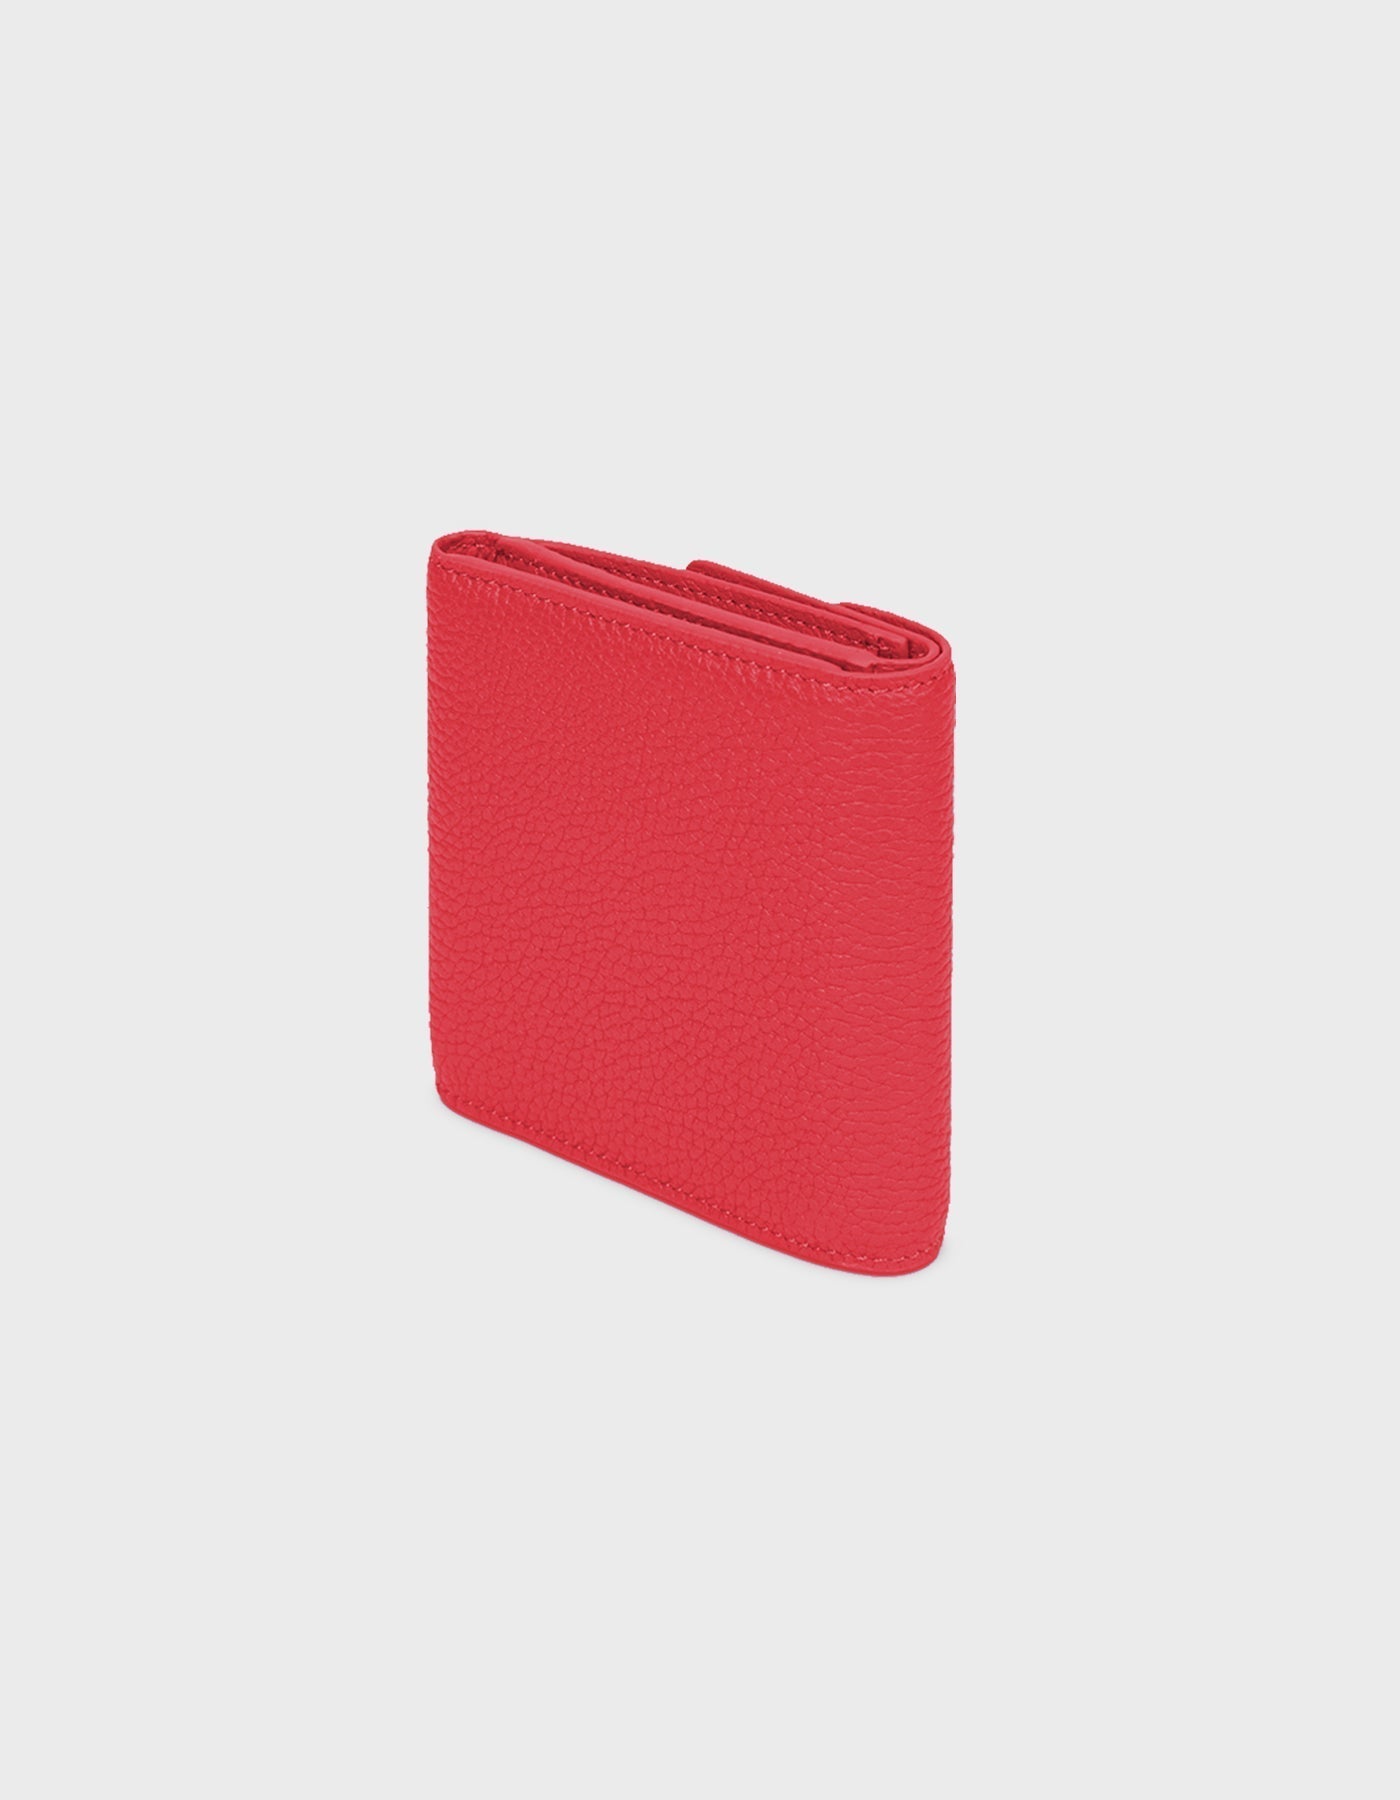 HiVa Atelier | Larus Compact Wallet Red | Beautiful and Versatile